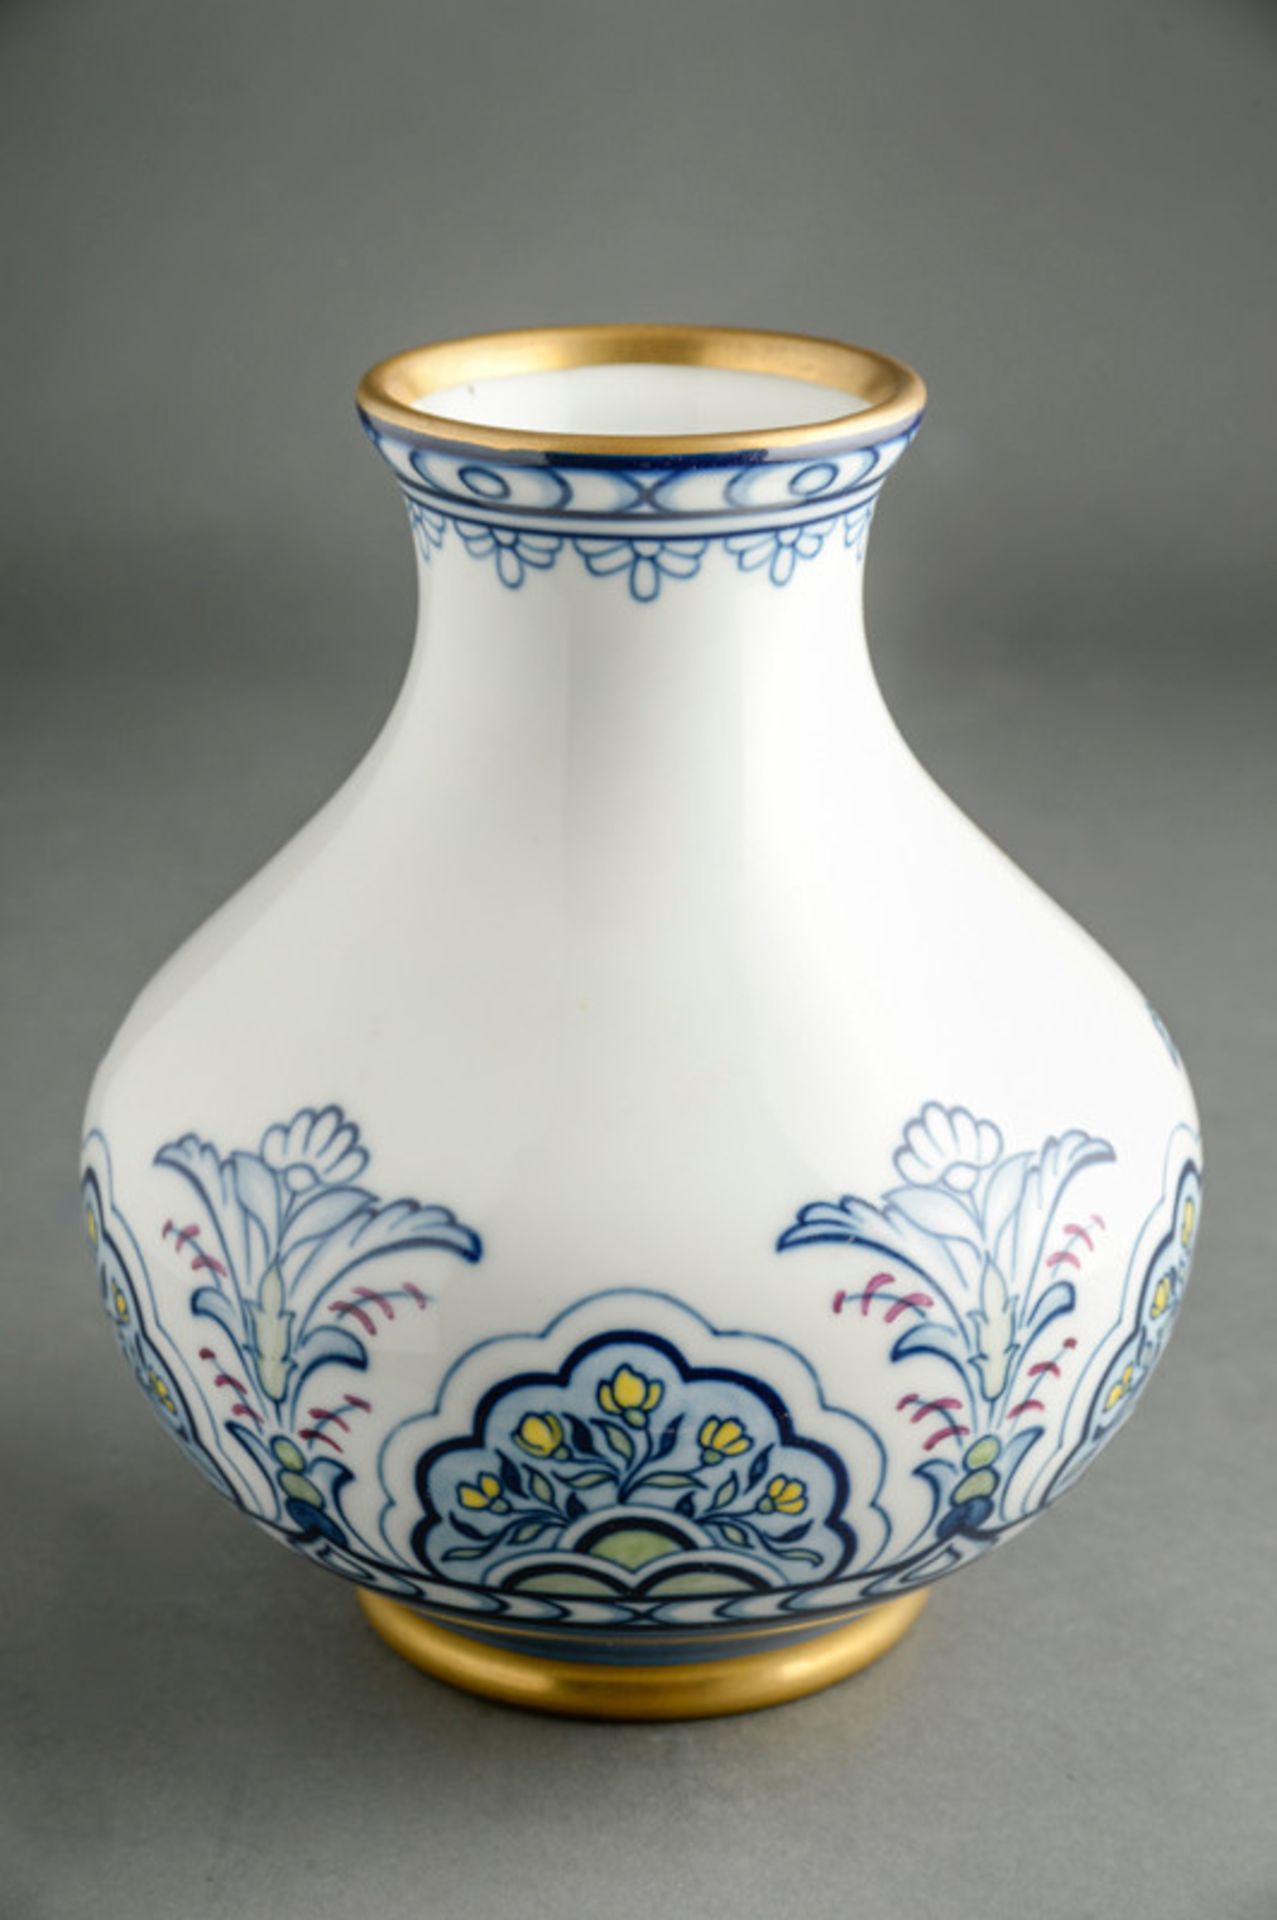 Art-Deco Vase der Porzellanfabrik Porsgrunds, Norwegen, 1923im Boden signiert "19 HF 23", limitierte